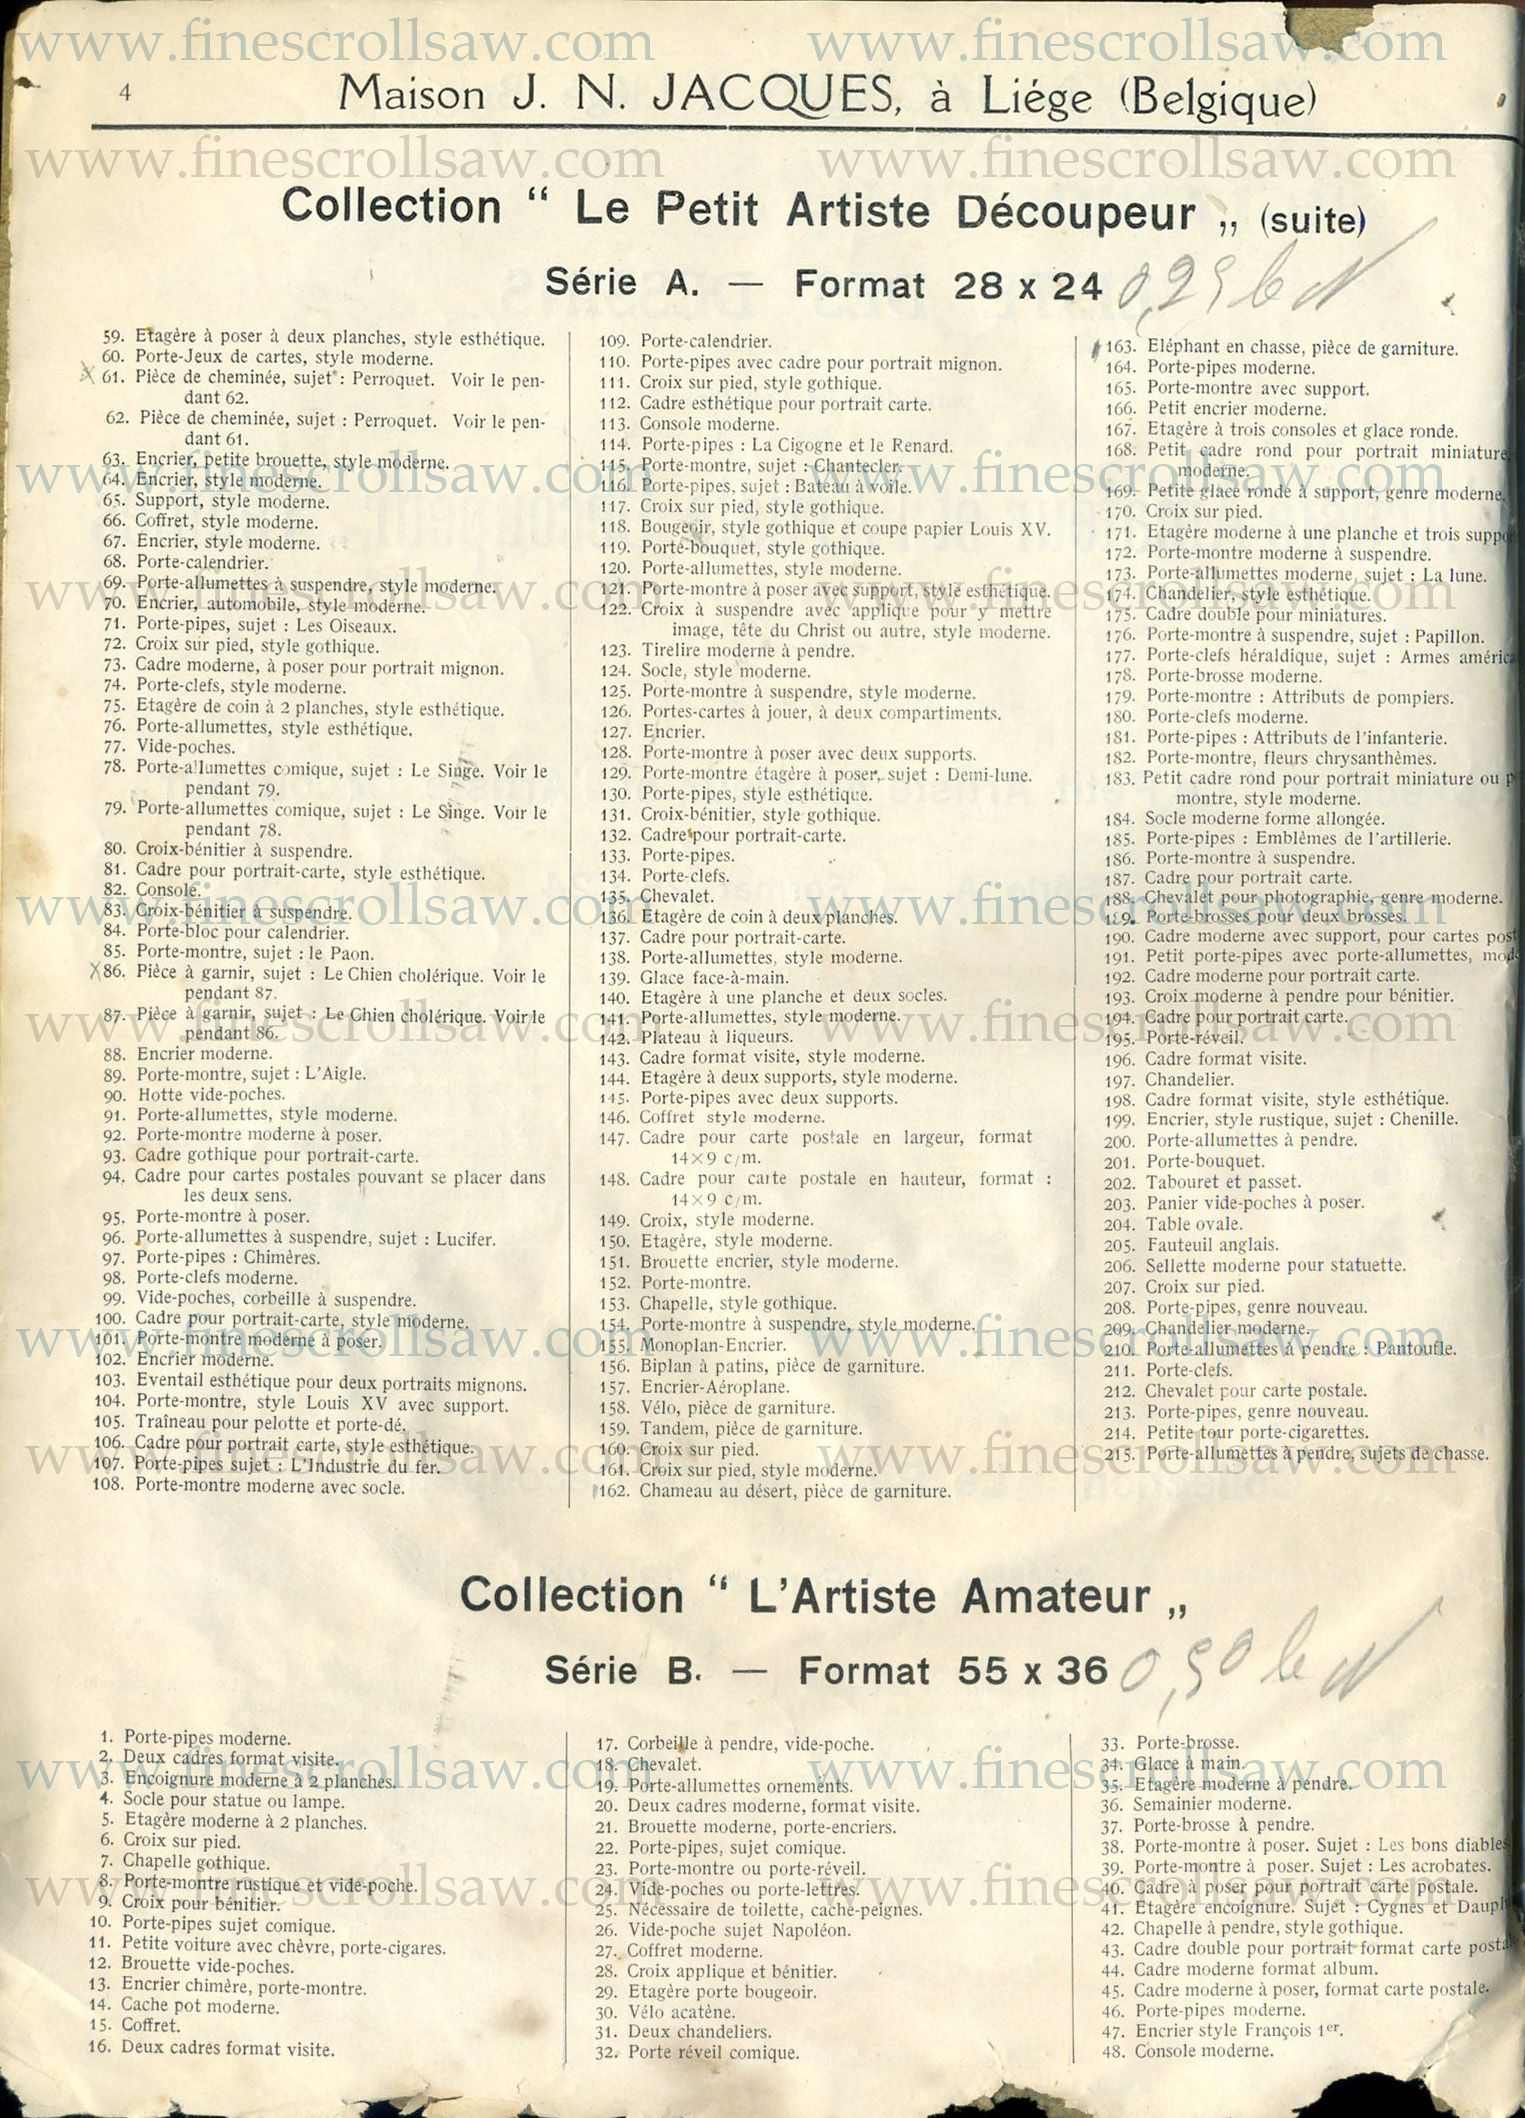 J. N. Jacques scroll saw fretwork catalogue, Liège, Belgium, 1924